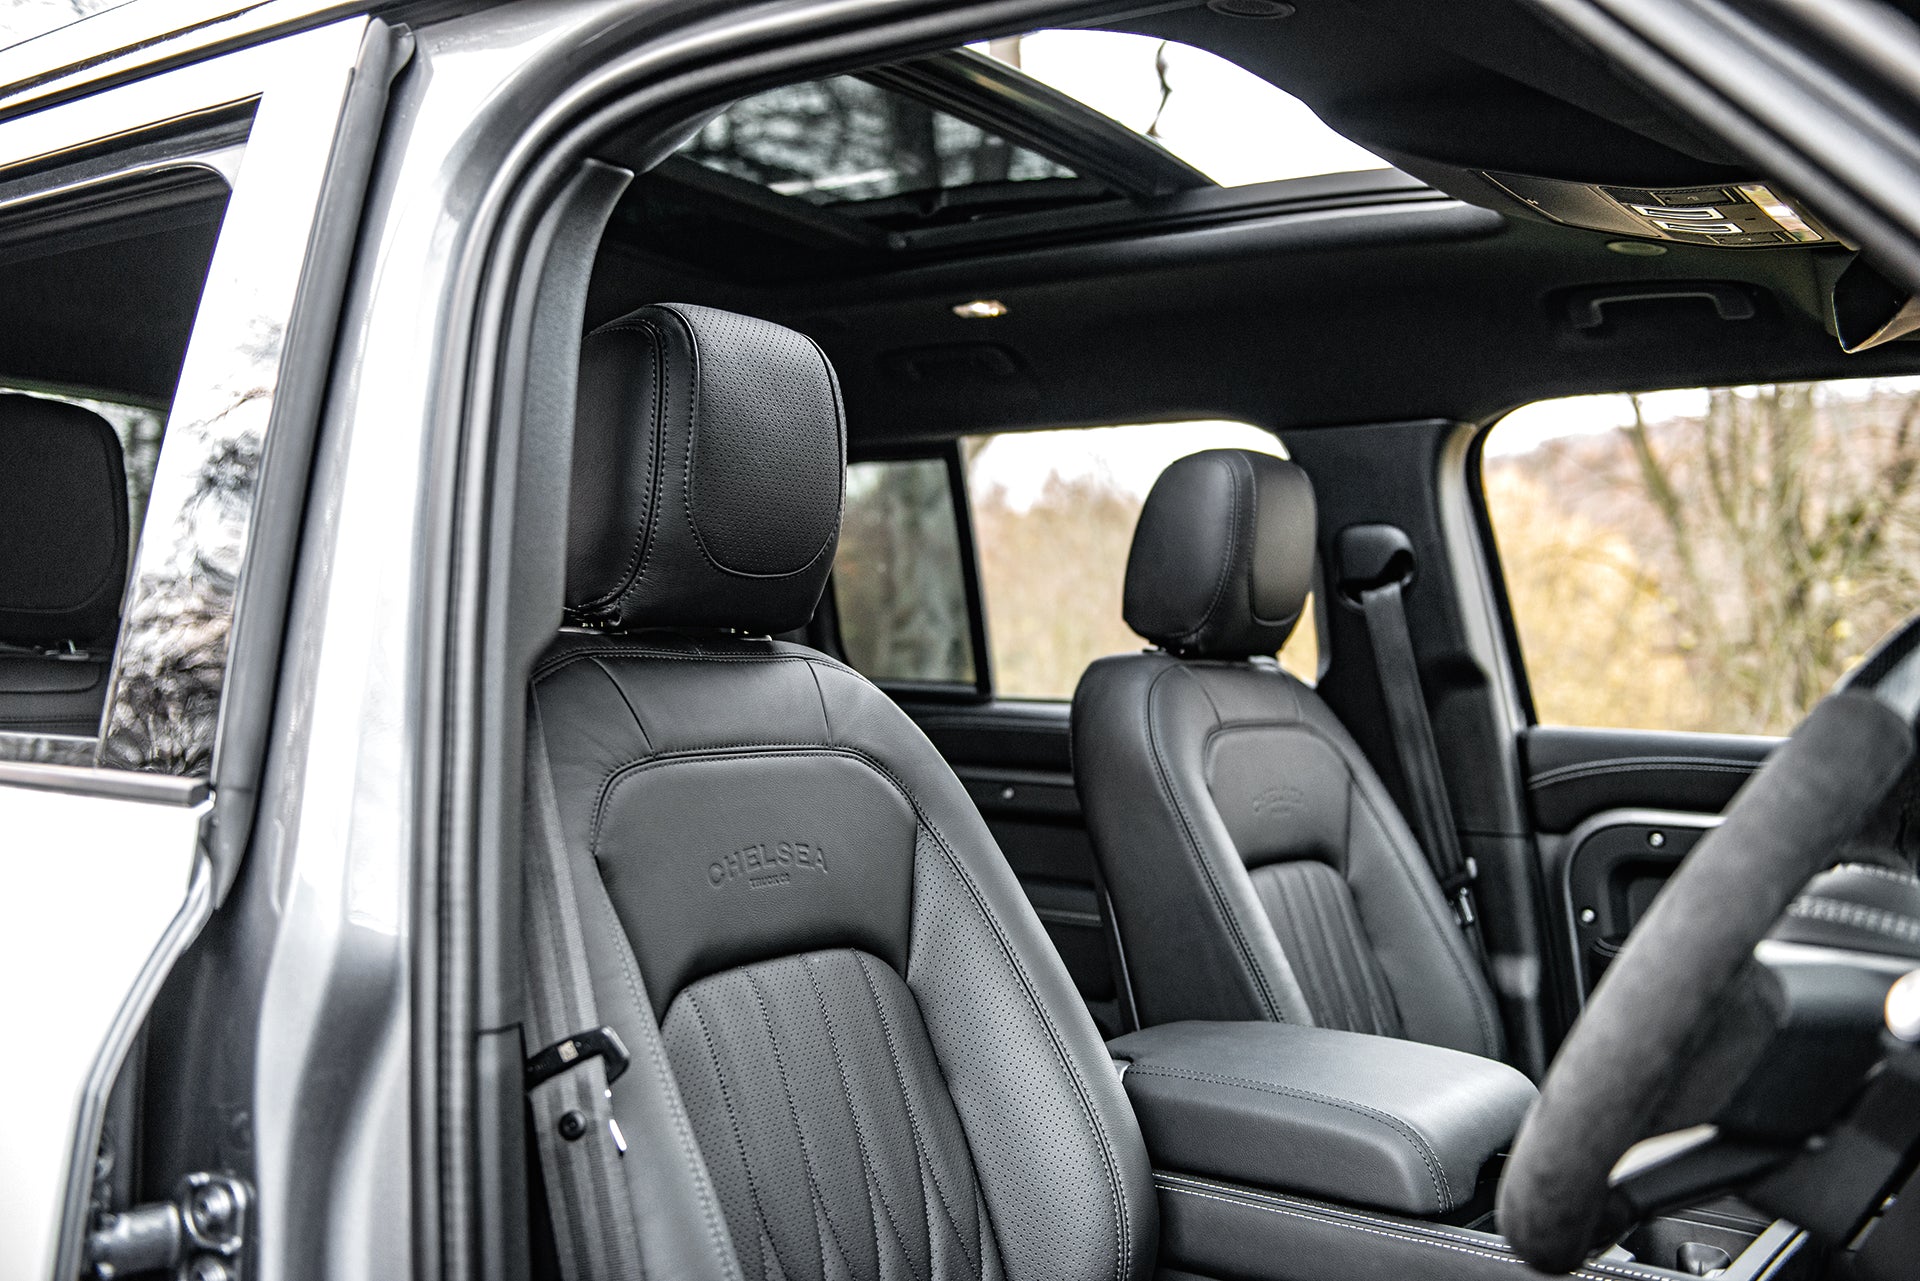 Land Rover Defender 110 Leather Interior